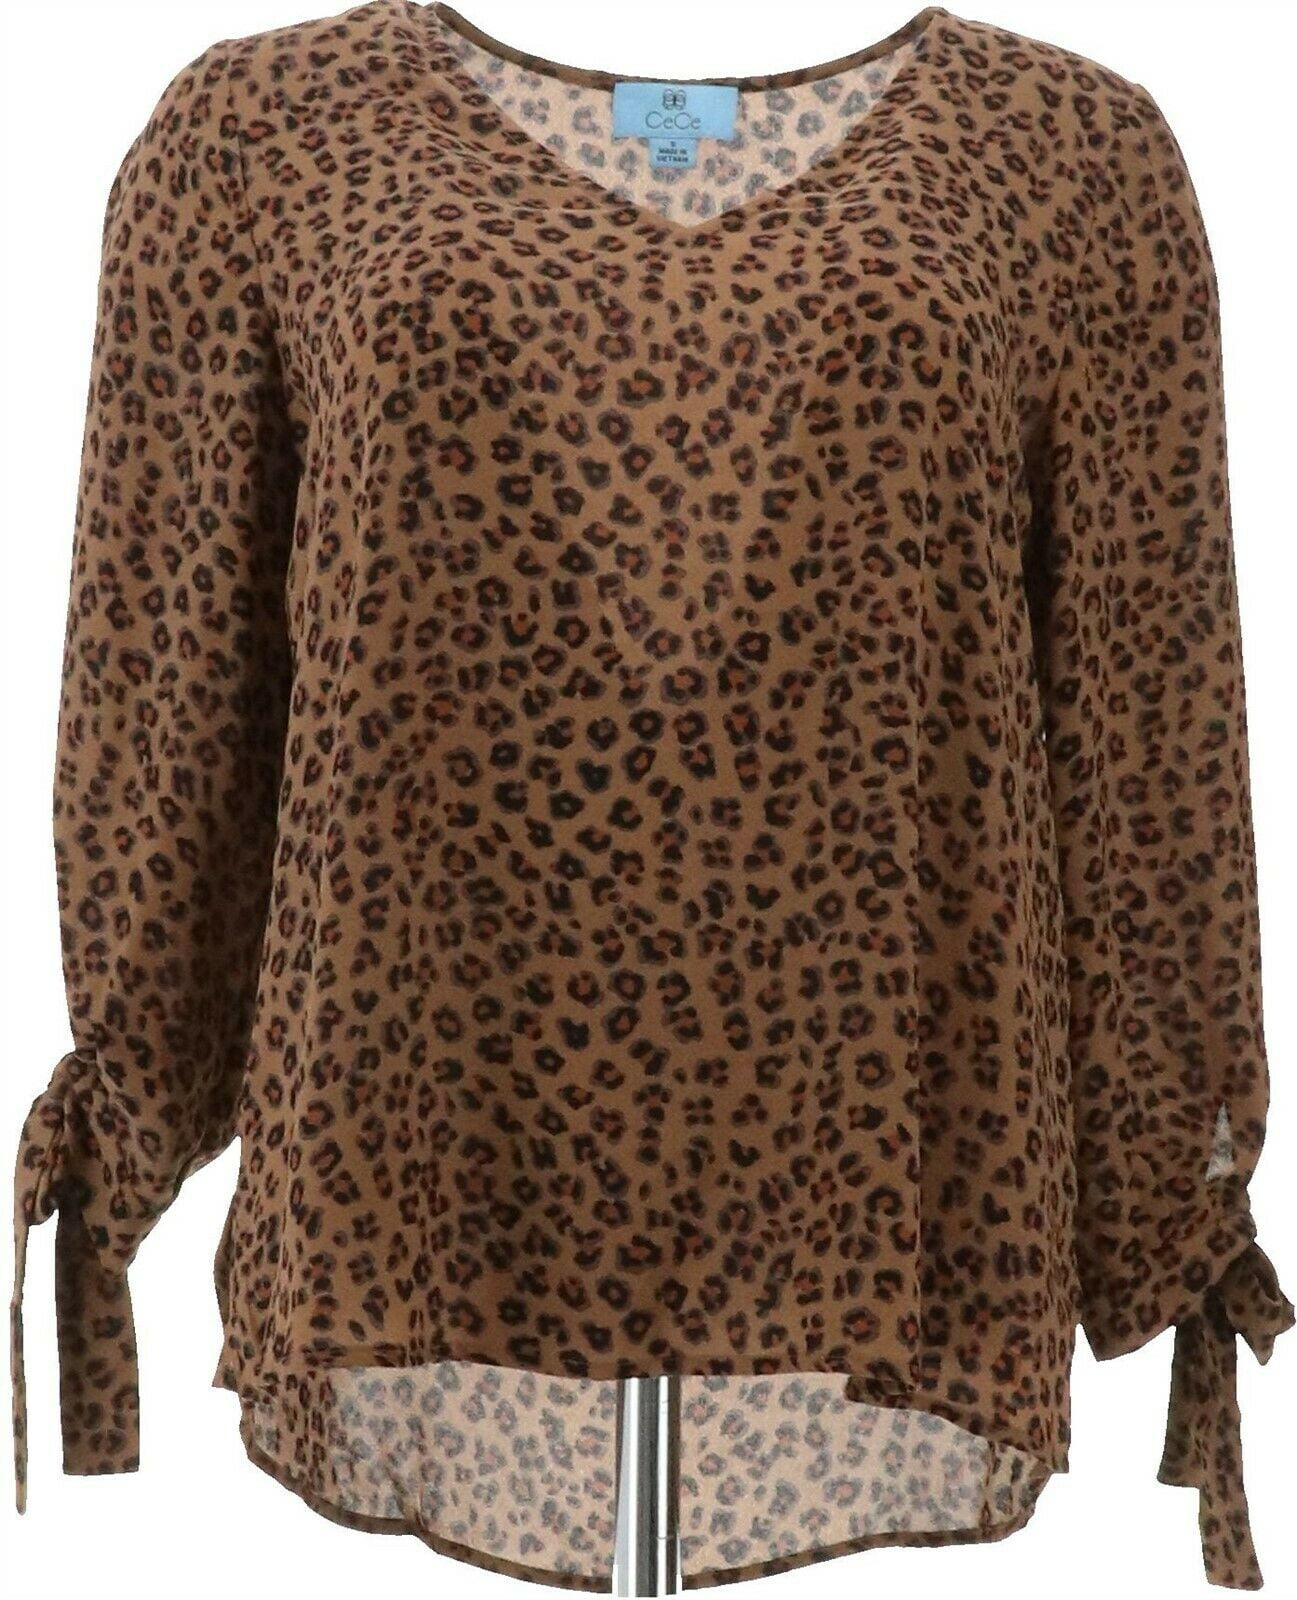 CeCe Leopard-Print Tie-Slv Blouse Women's 698-500 - Walmart.com